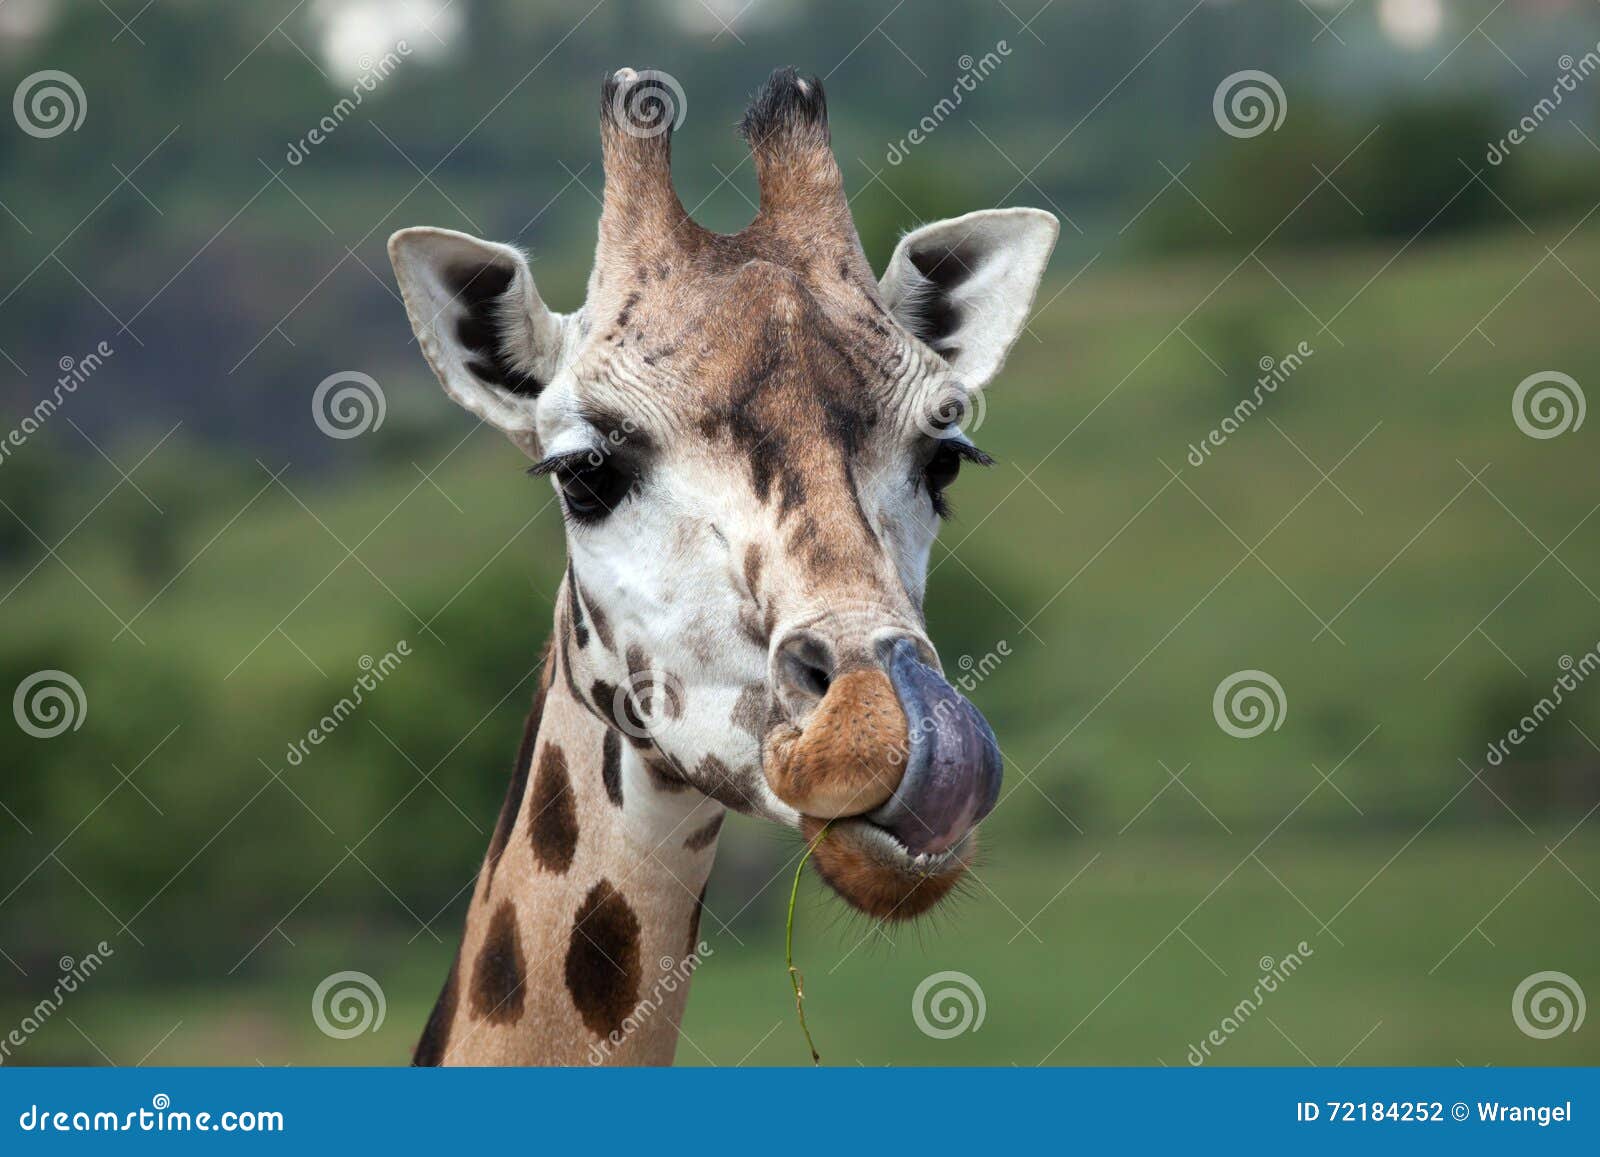 rothschild's giraffe (giraffa camelopardalis rothschildi).